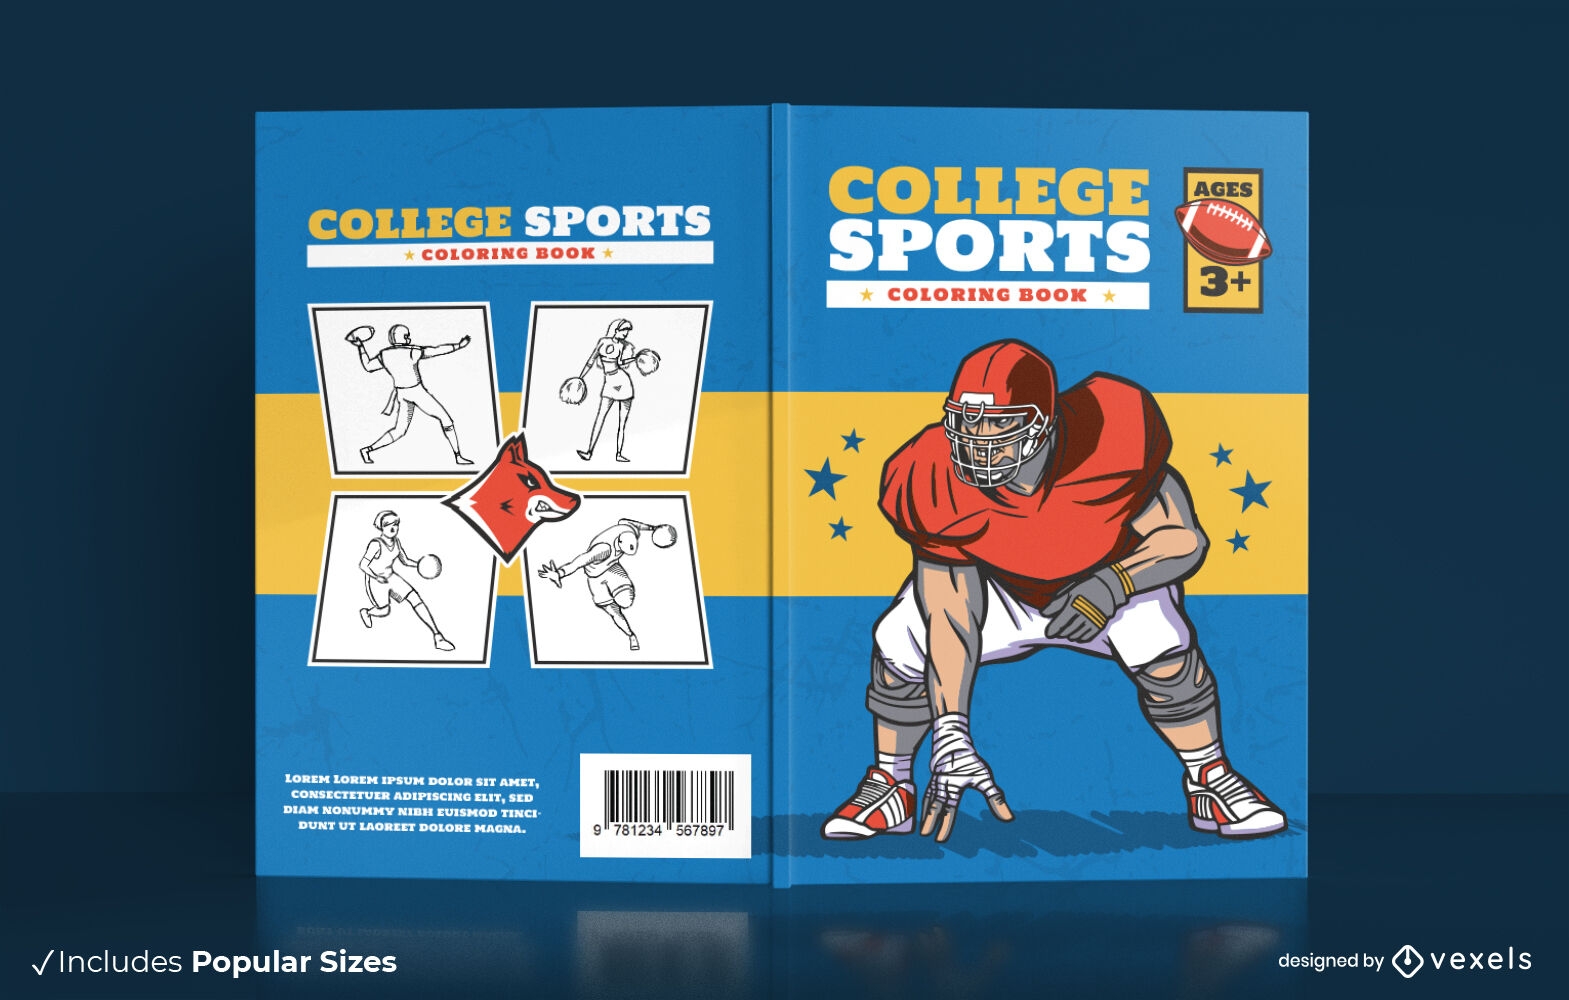 College sports coloring book cover design